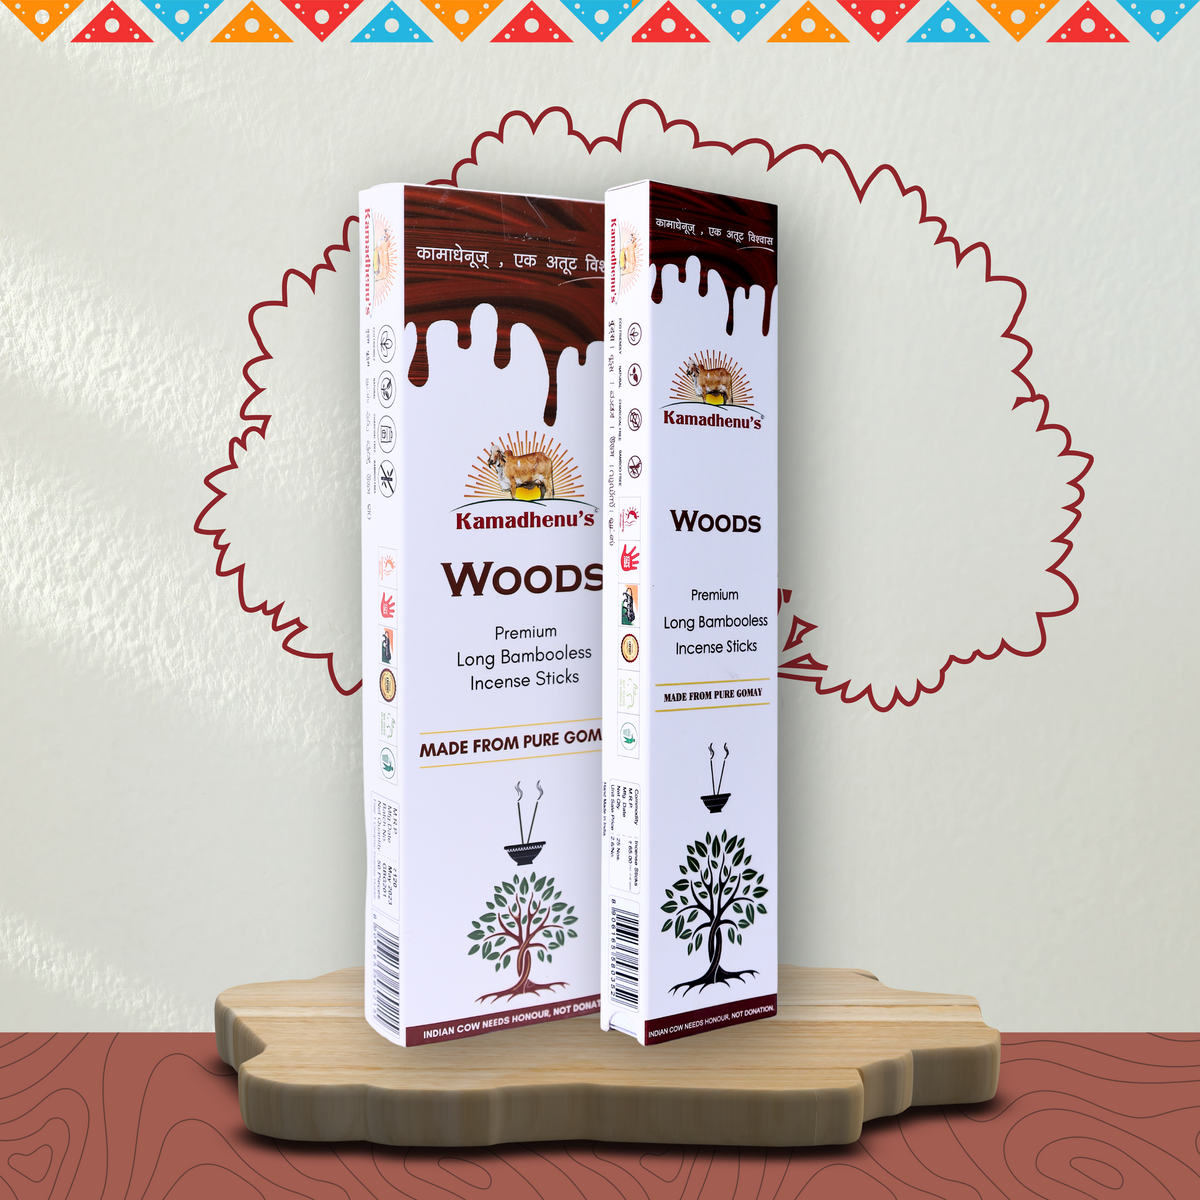 Kamadhenu's Woods Premium Long Bambooless Incense Sticks